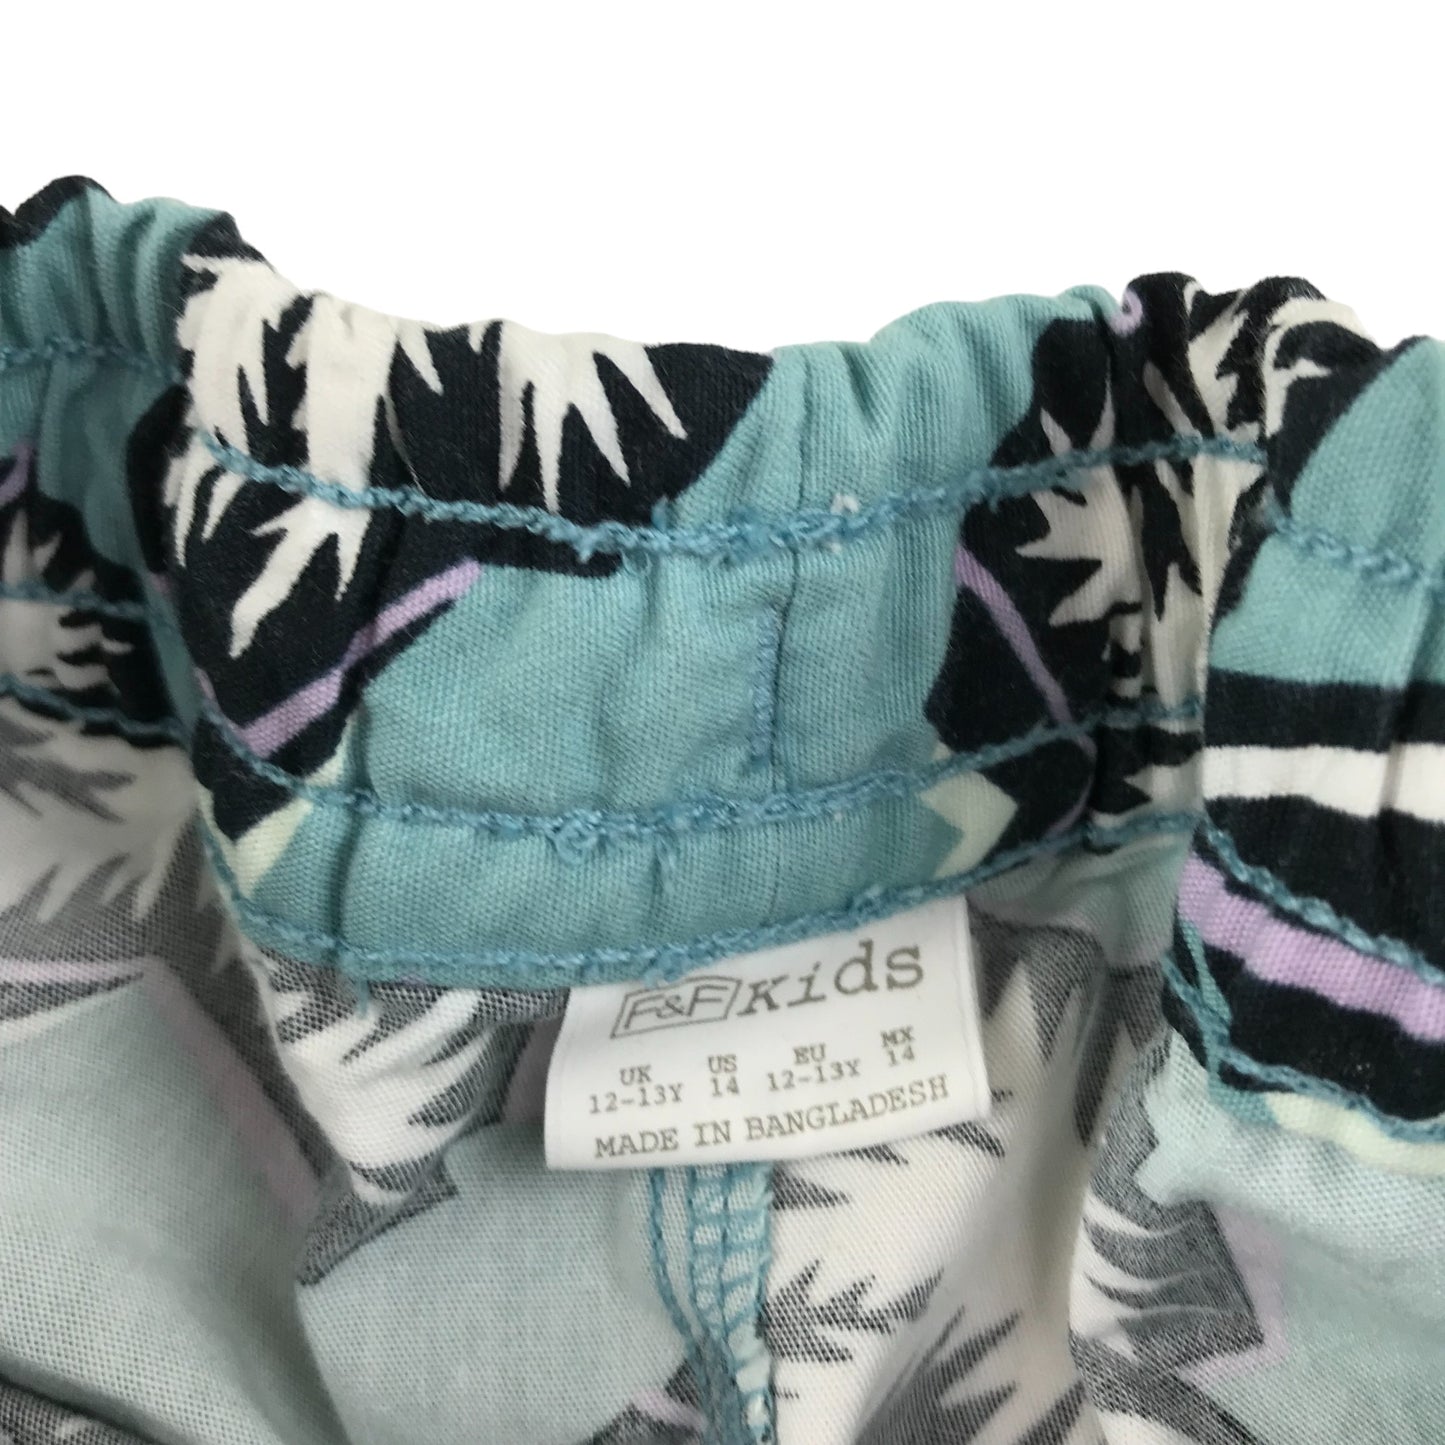 F&F Shirt and Shorts Bundle Age 11 Light Blue Palm Trees Print Cotton